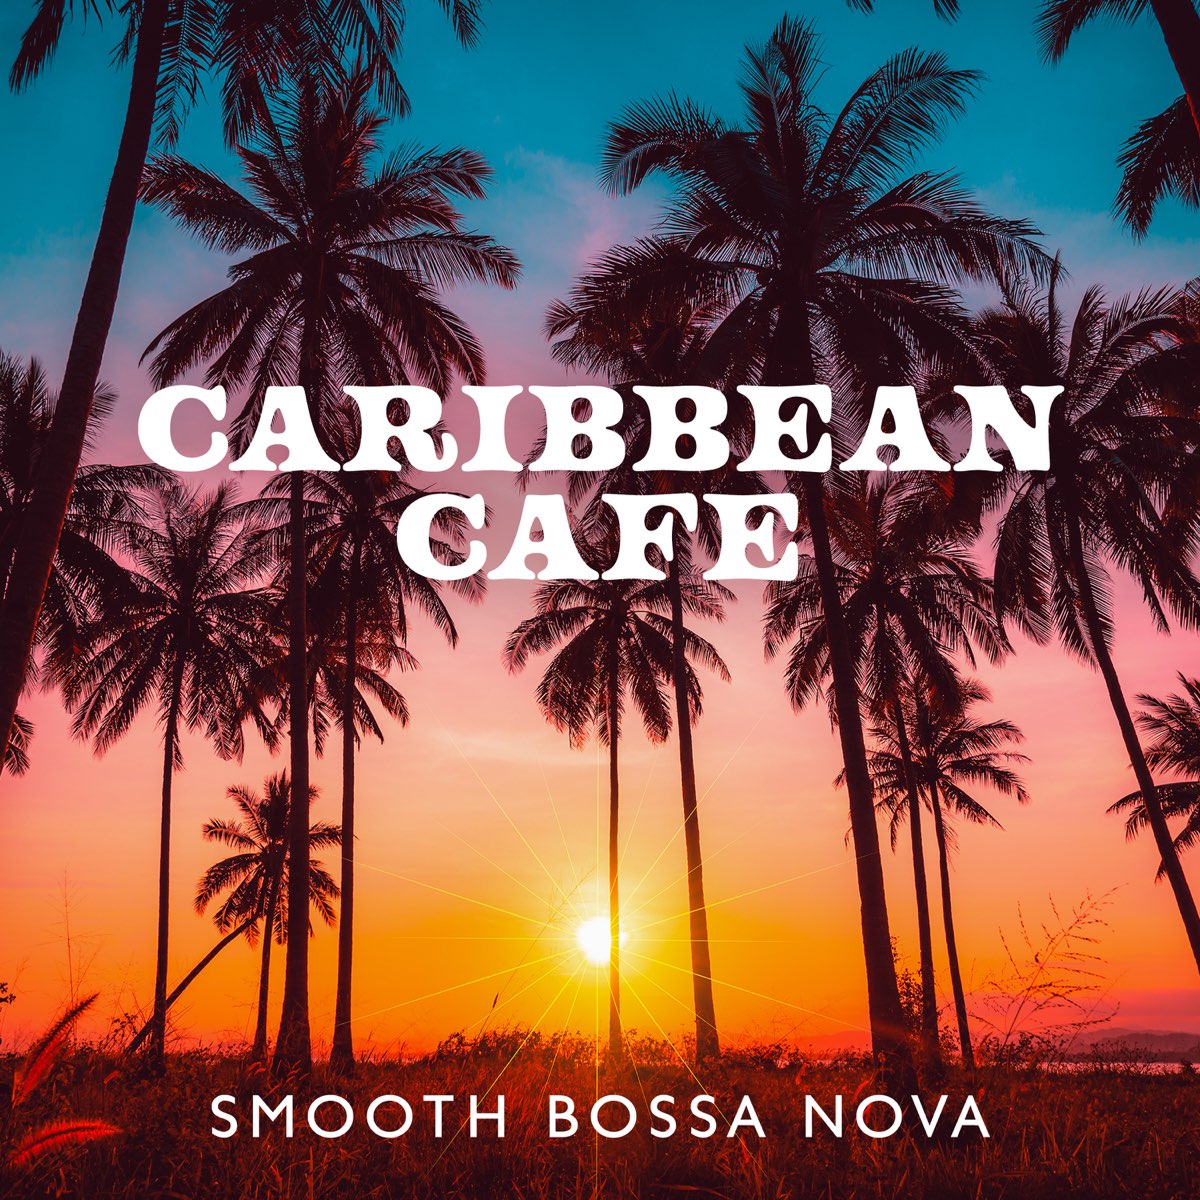 Tuesday Morning Jazz - Autumn Jazz & Bossa Nova Music for Coffee Break 